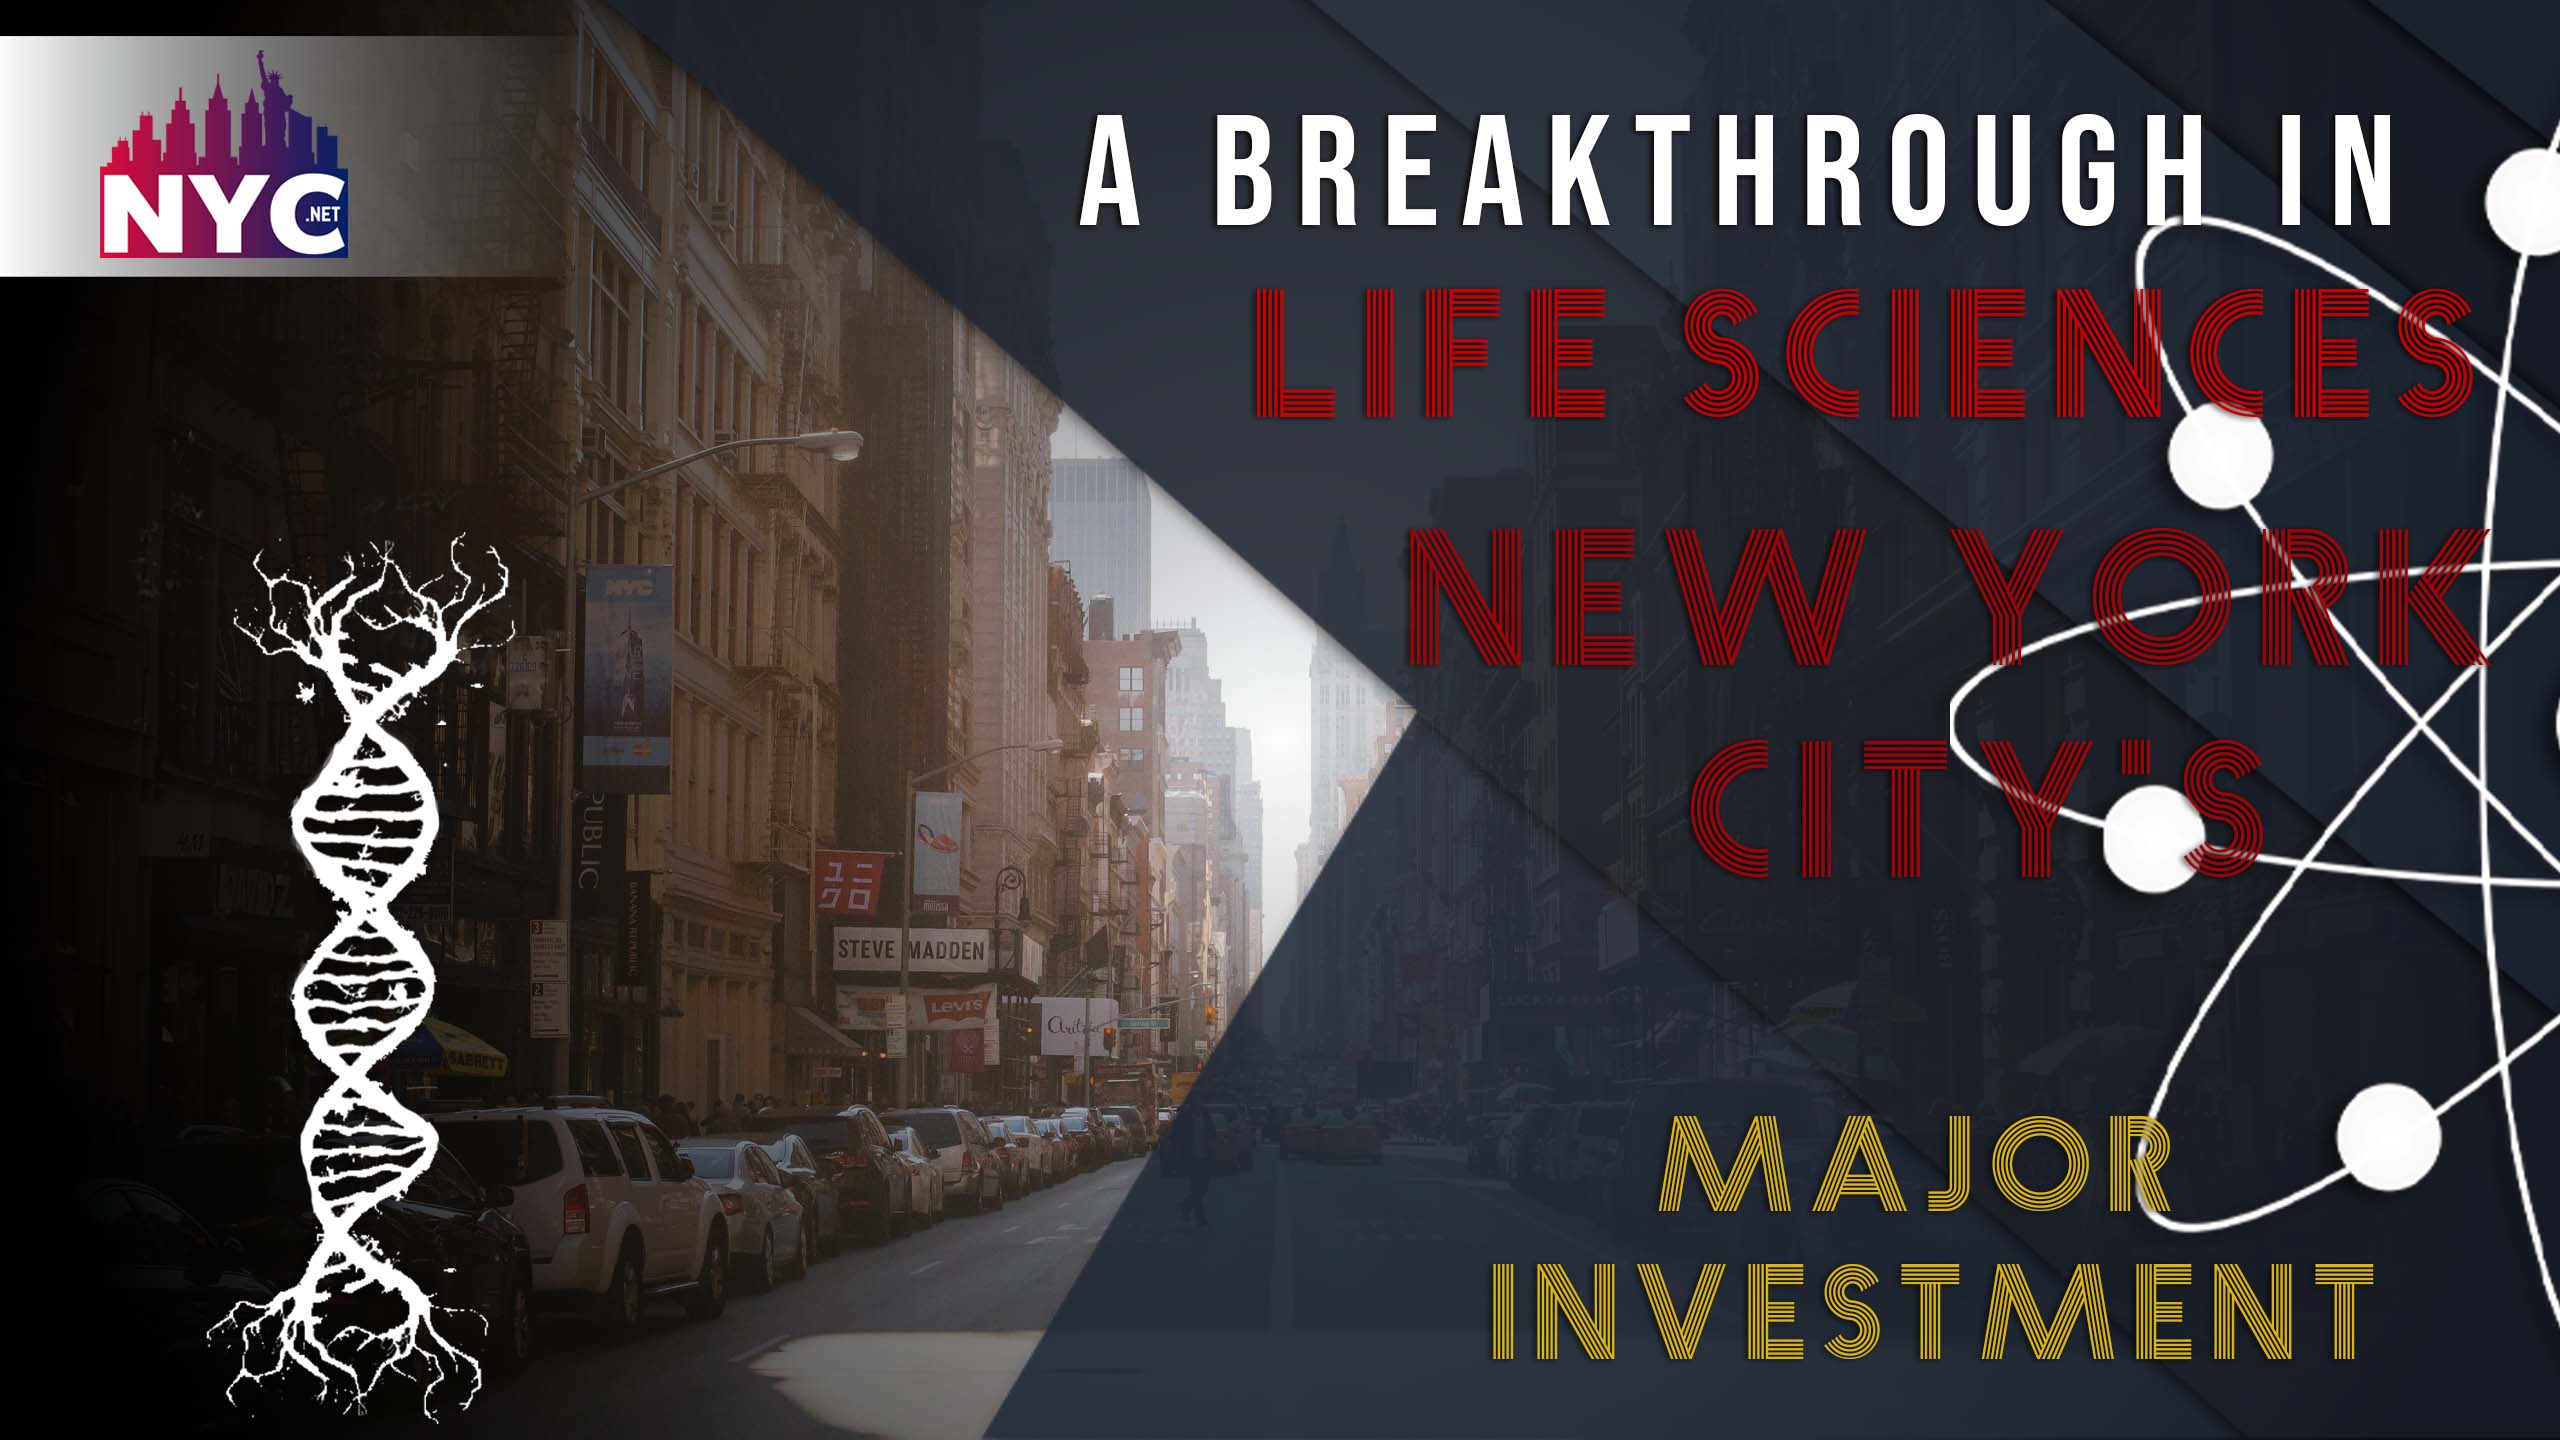 New York City's Major Investment